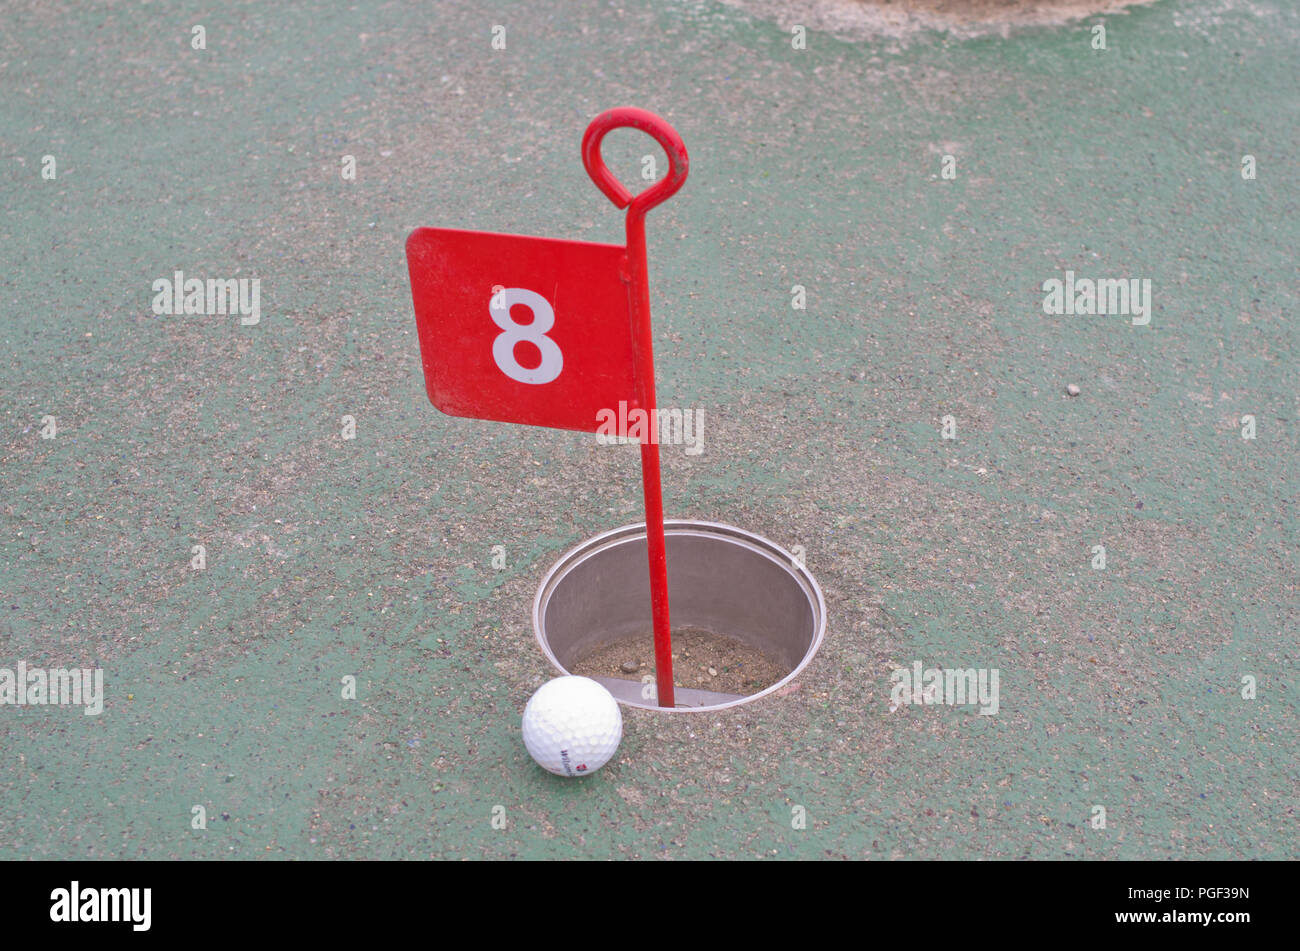 Mini Golf Putting Green Ball Hole UK Stock Photo